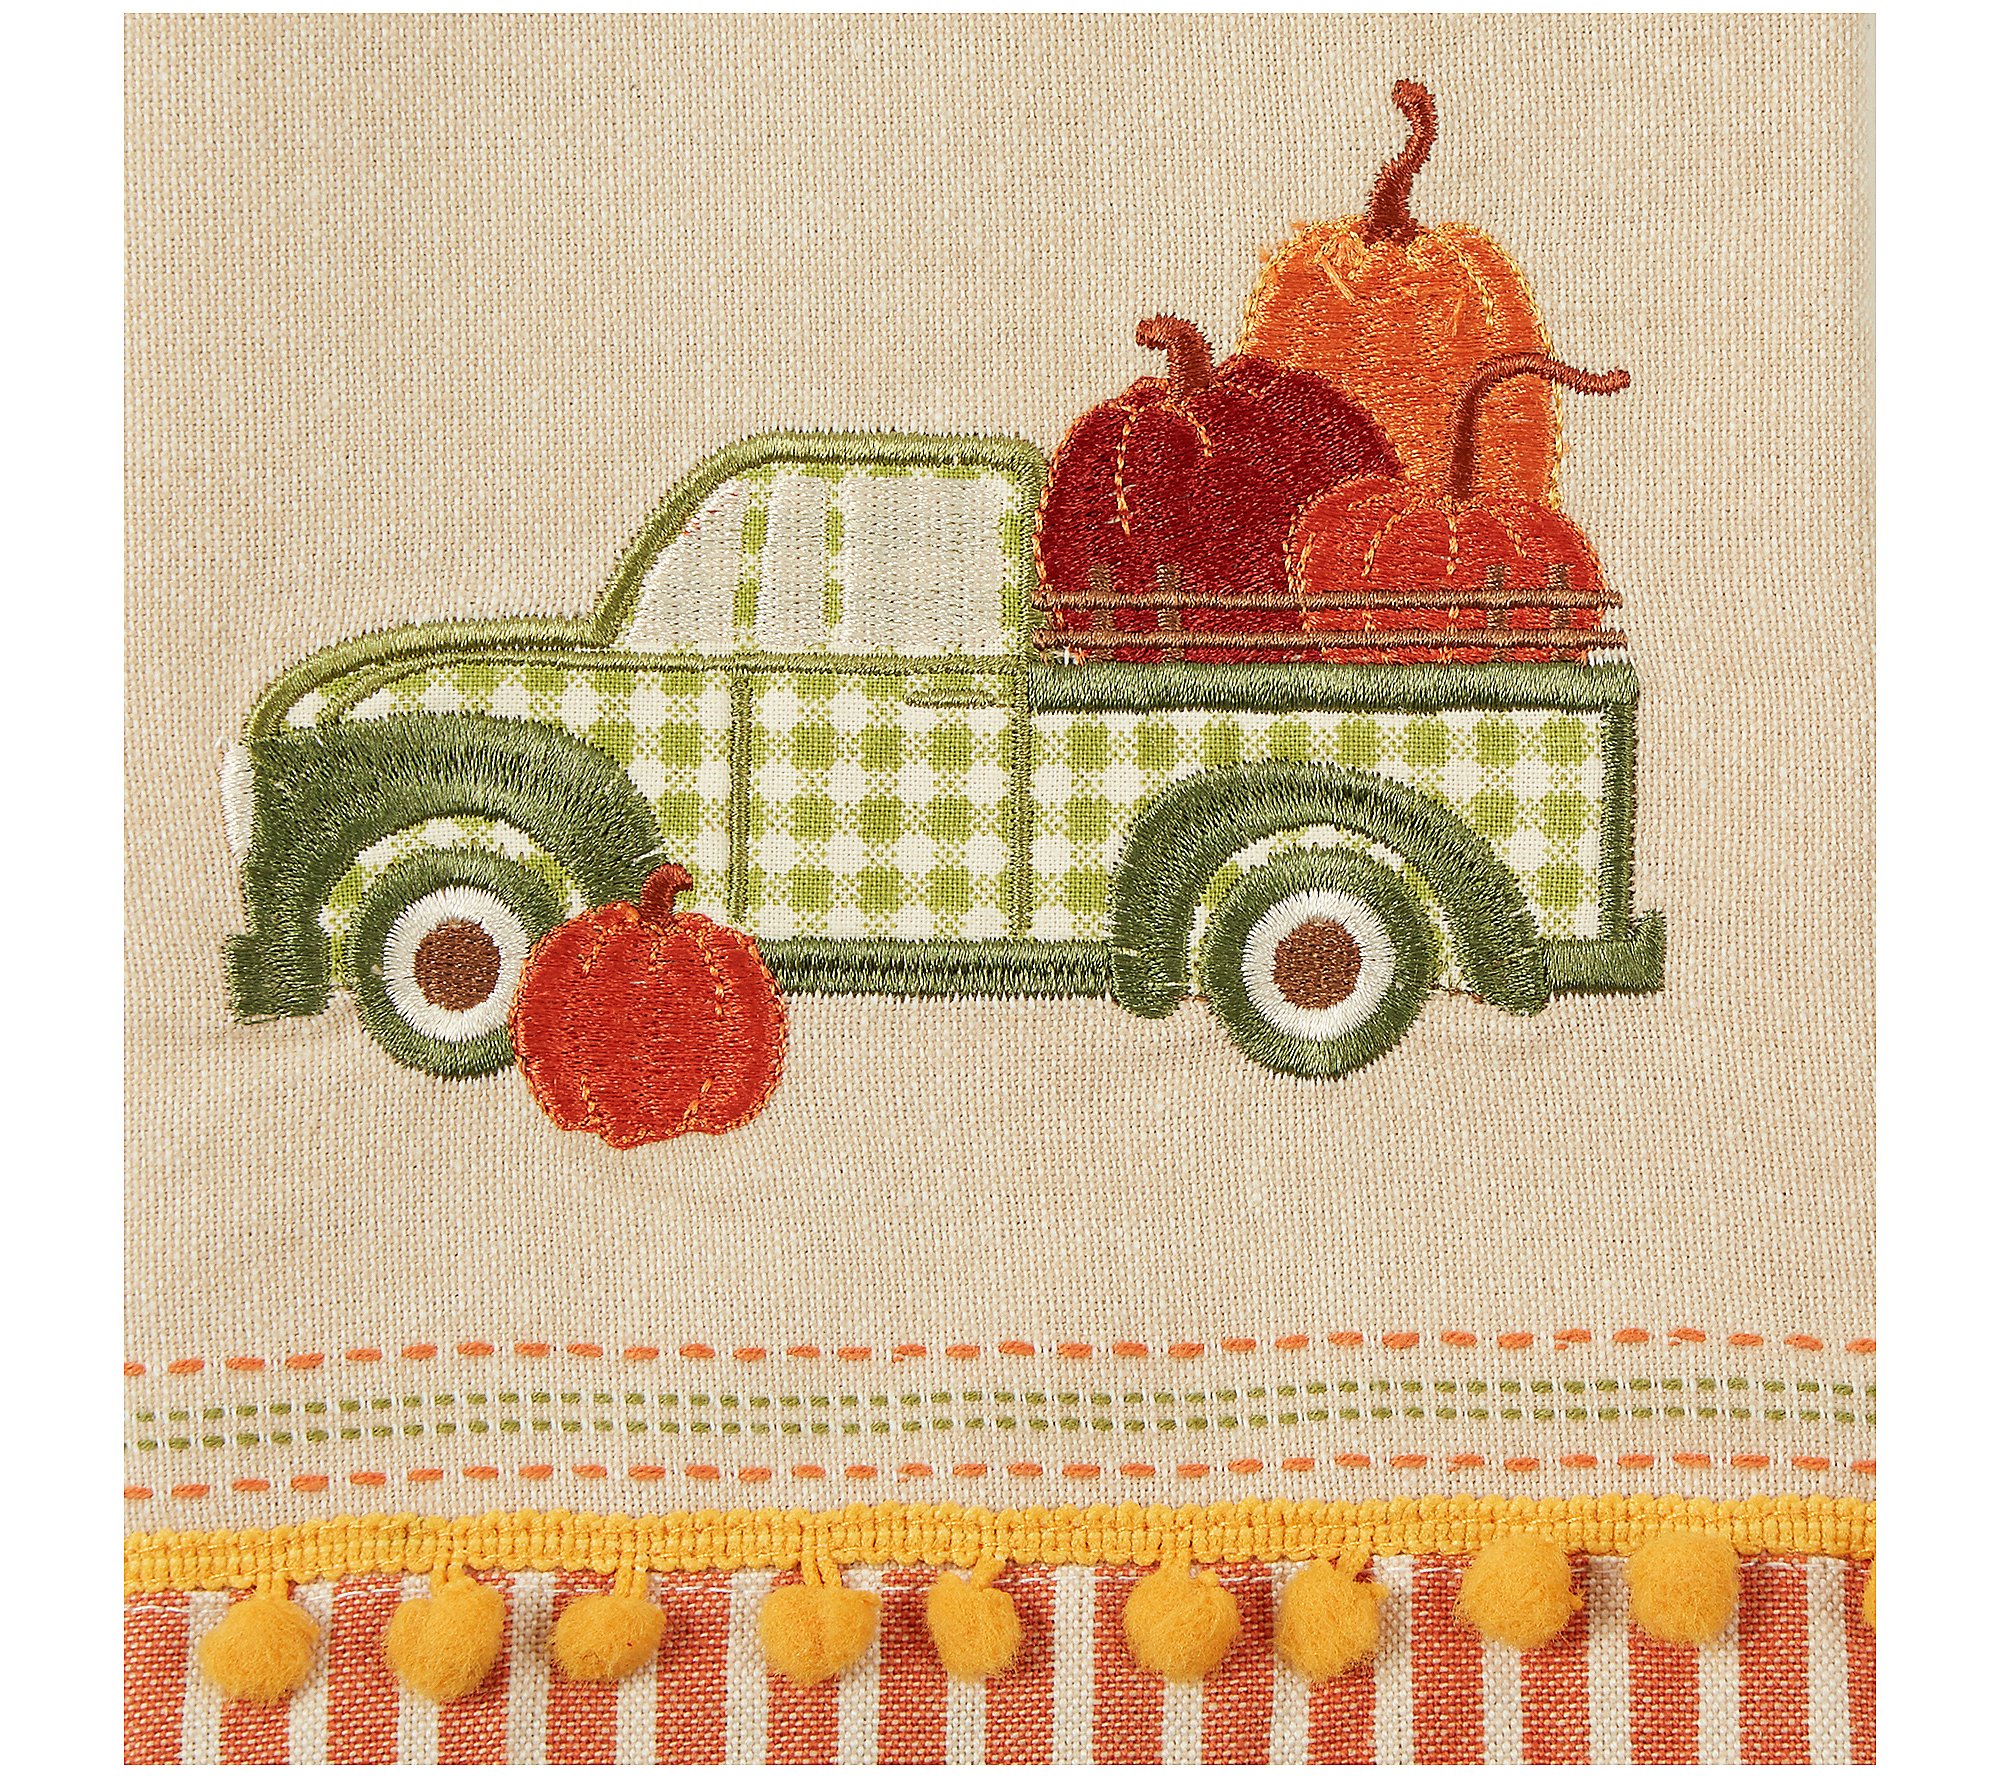 Design Imports Set of 3 Pumpkin Patch Truck Kit chen Towels